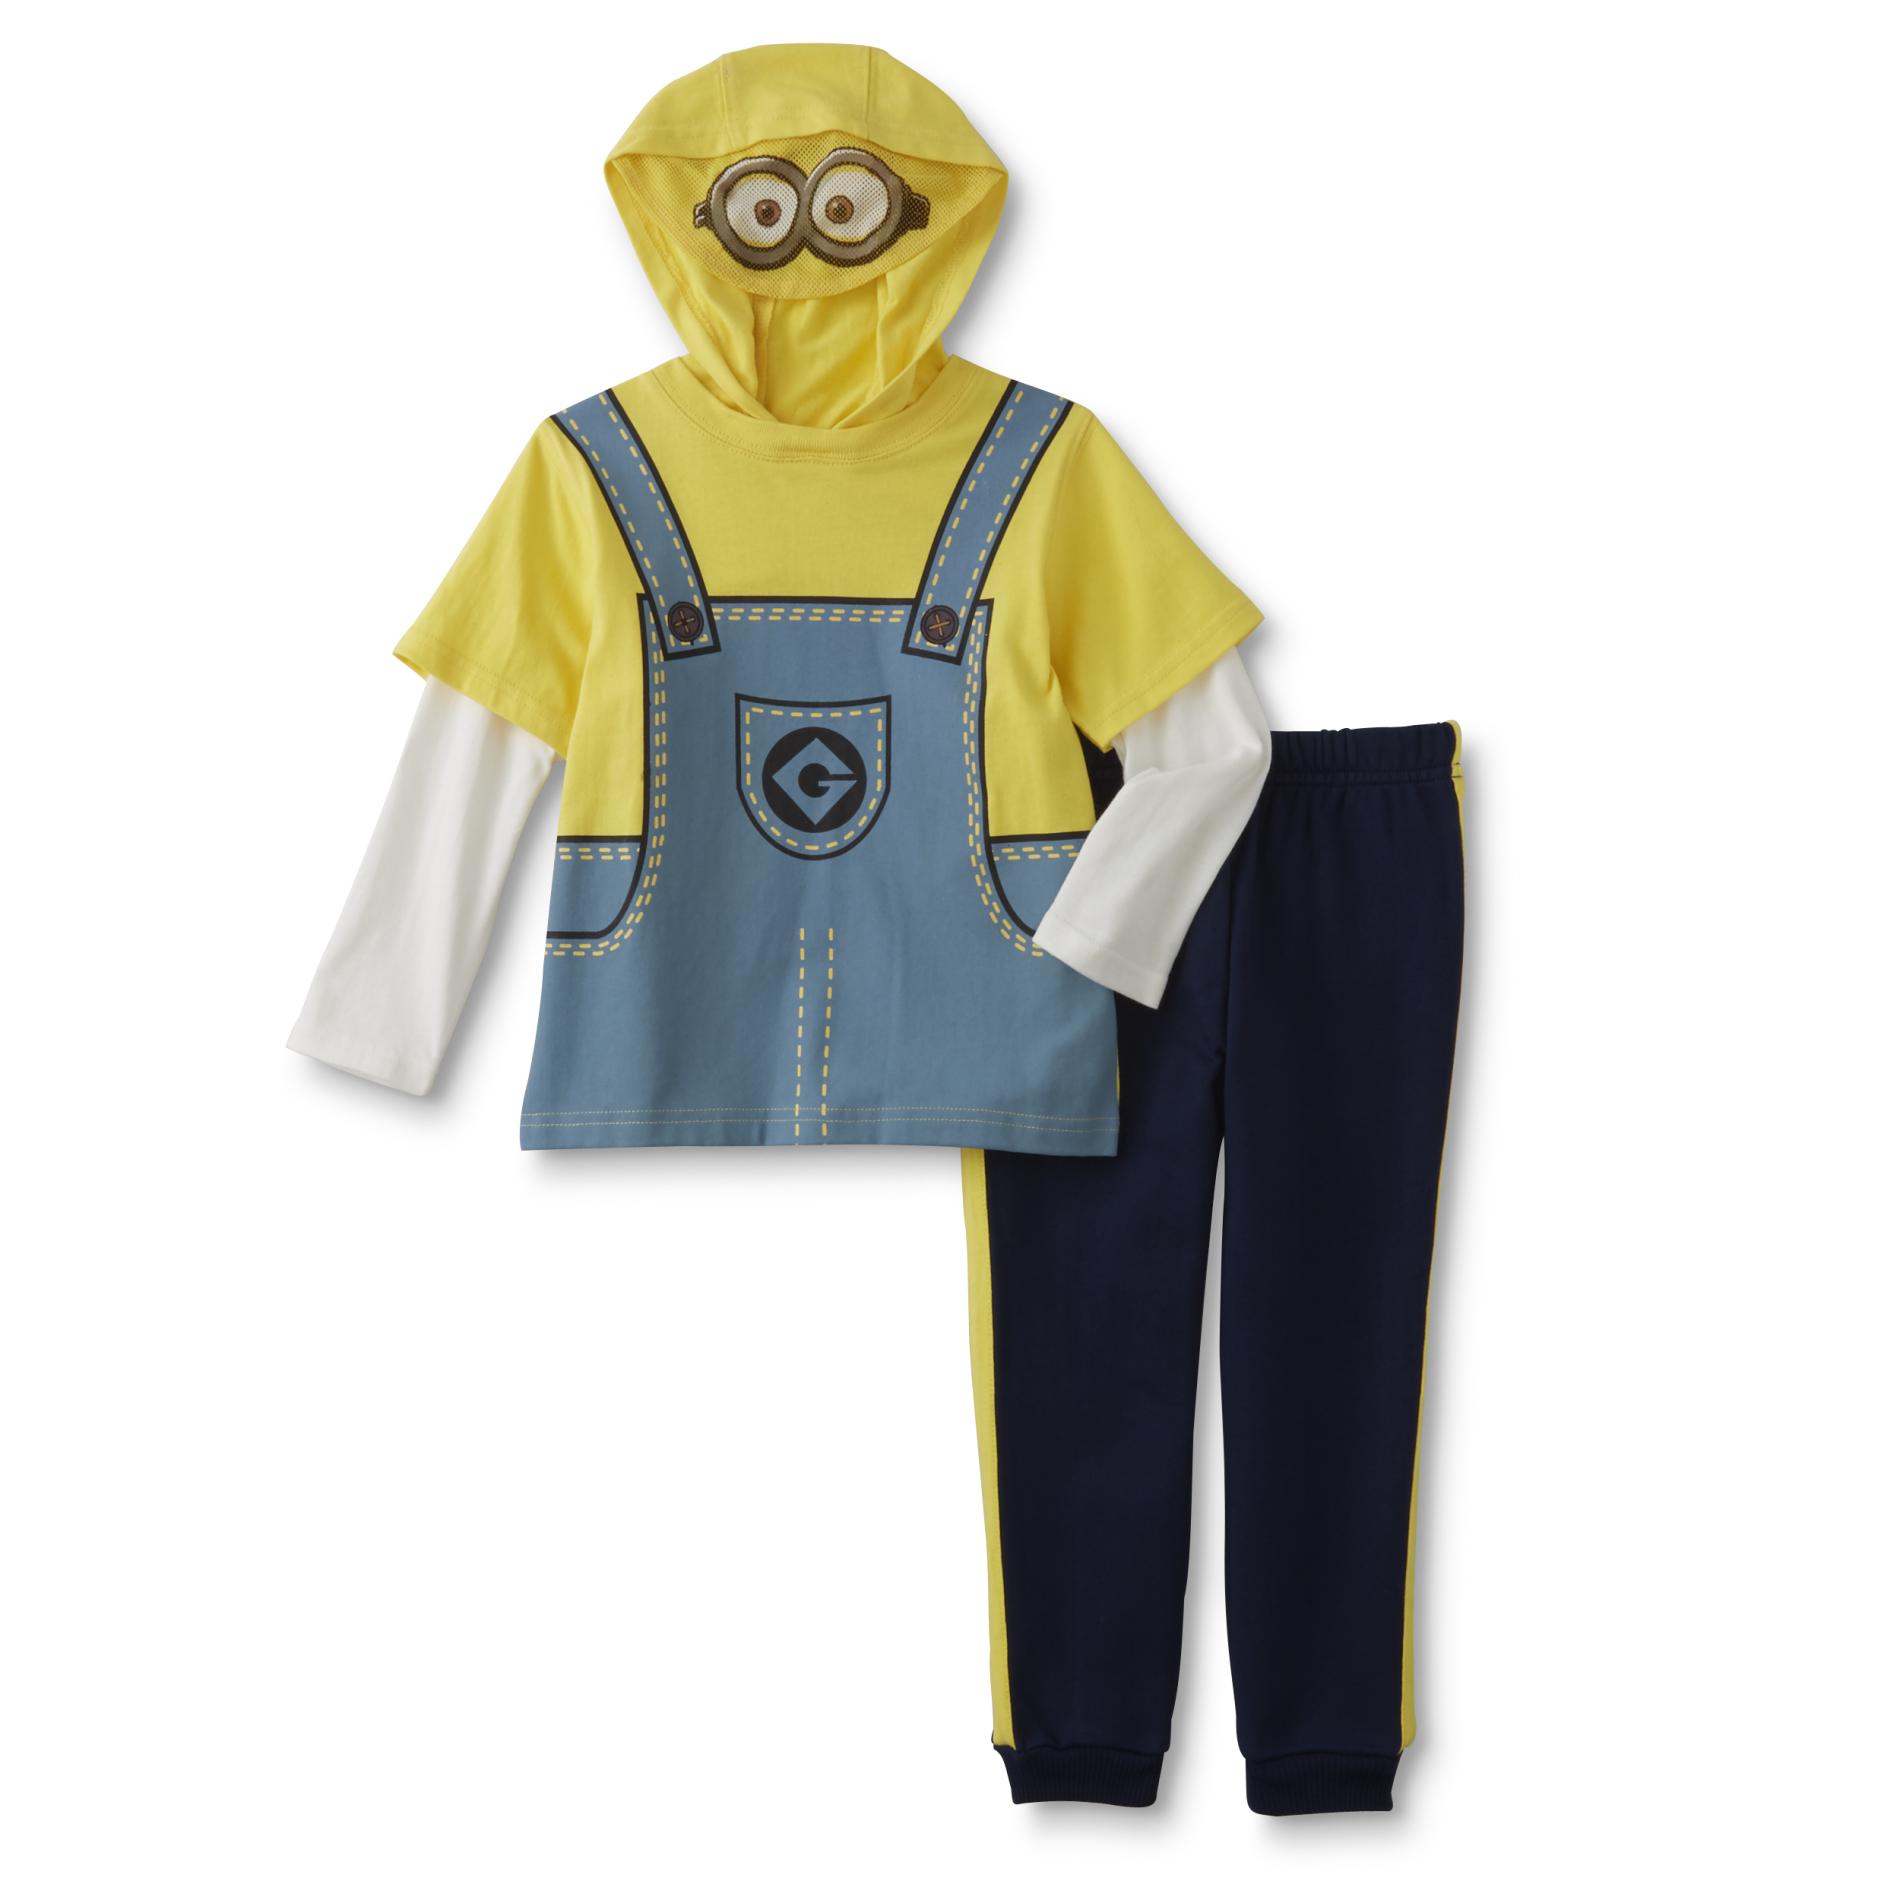 Universal Studios Toddler Boy's Hooded Costume Shirt & Pants